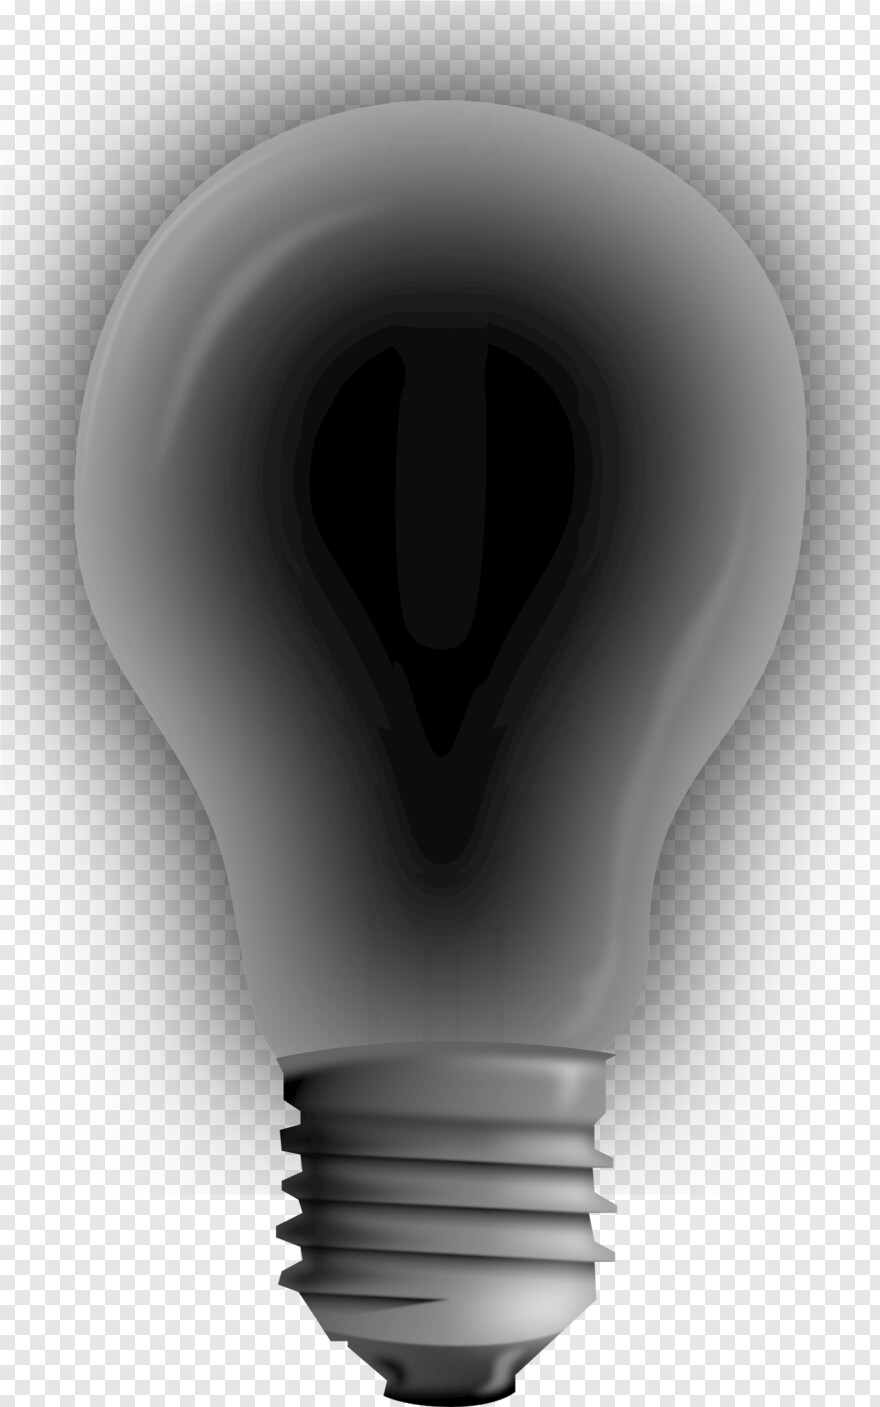 lightbulb-icon # 716523